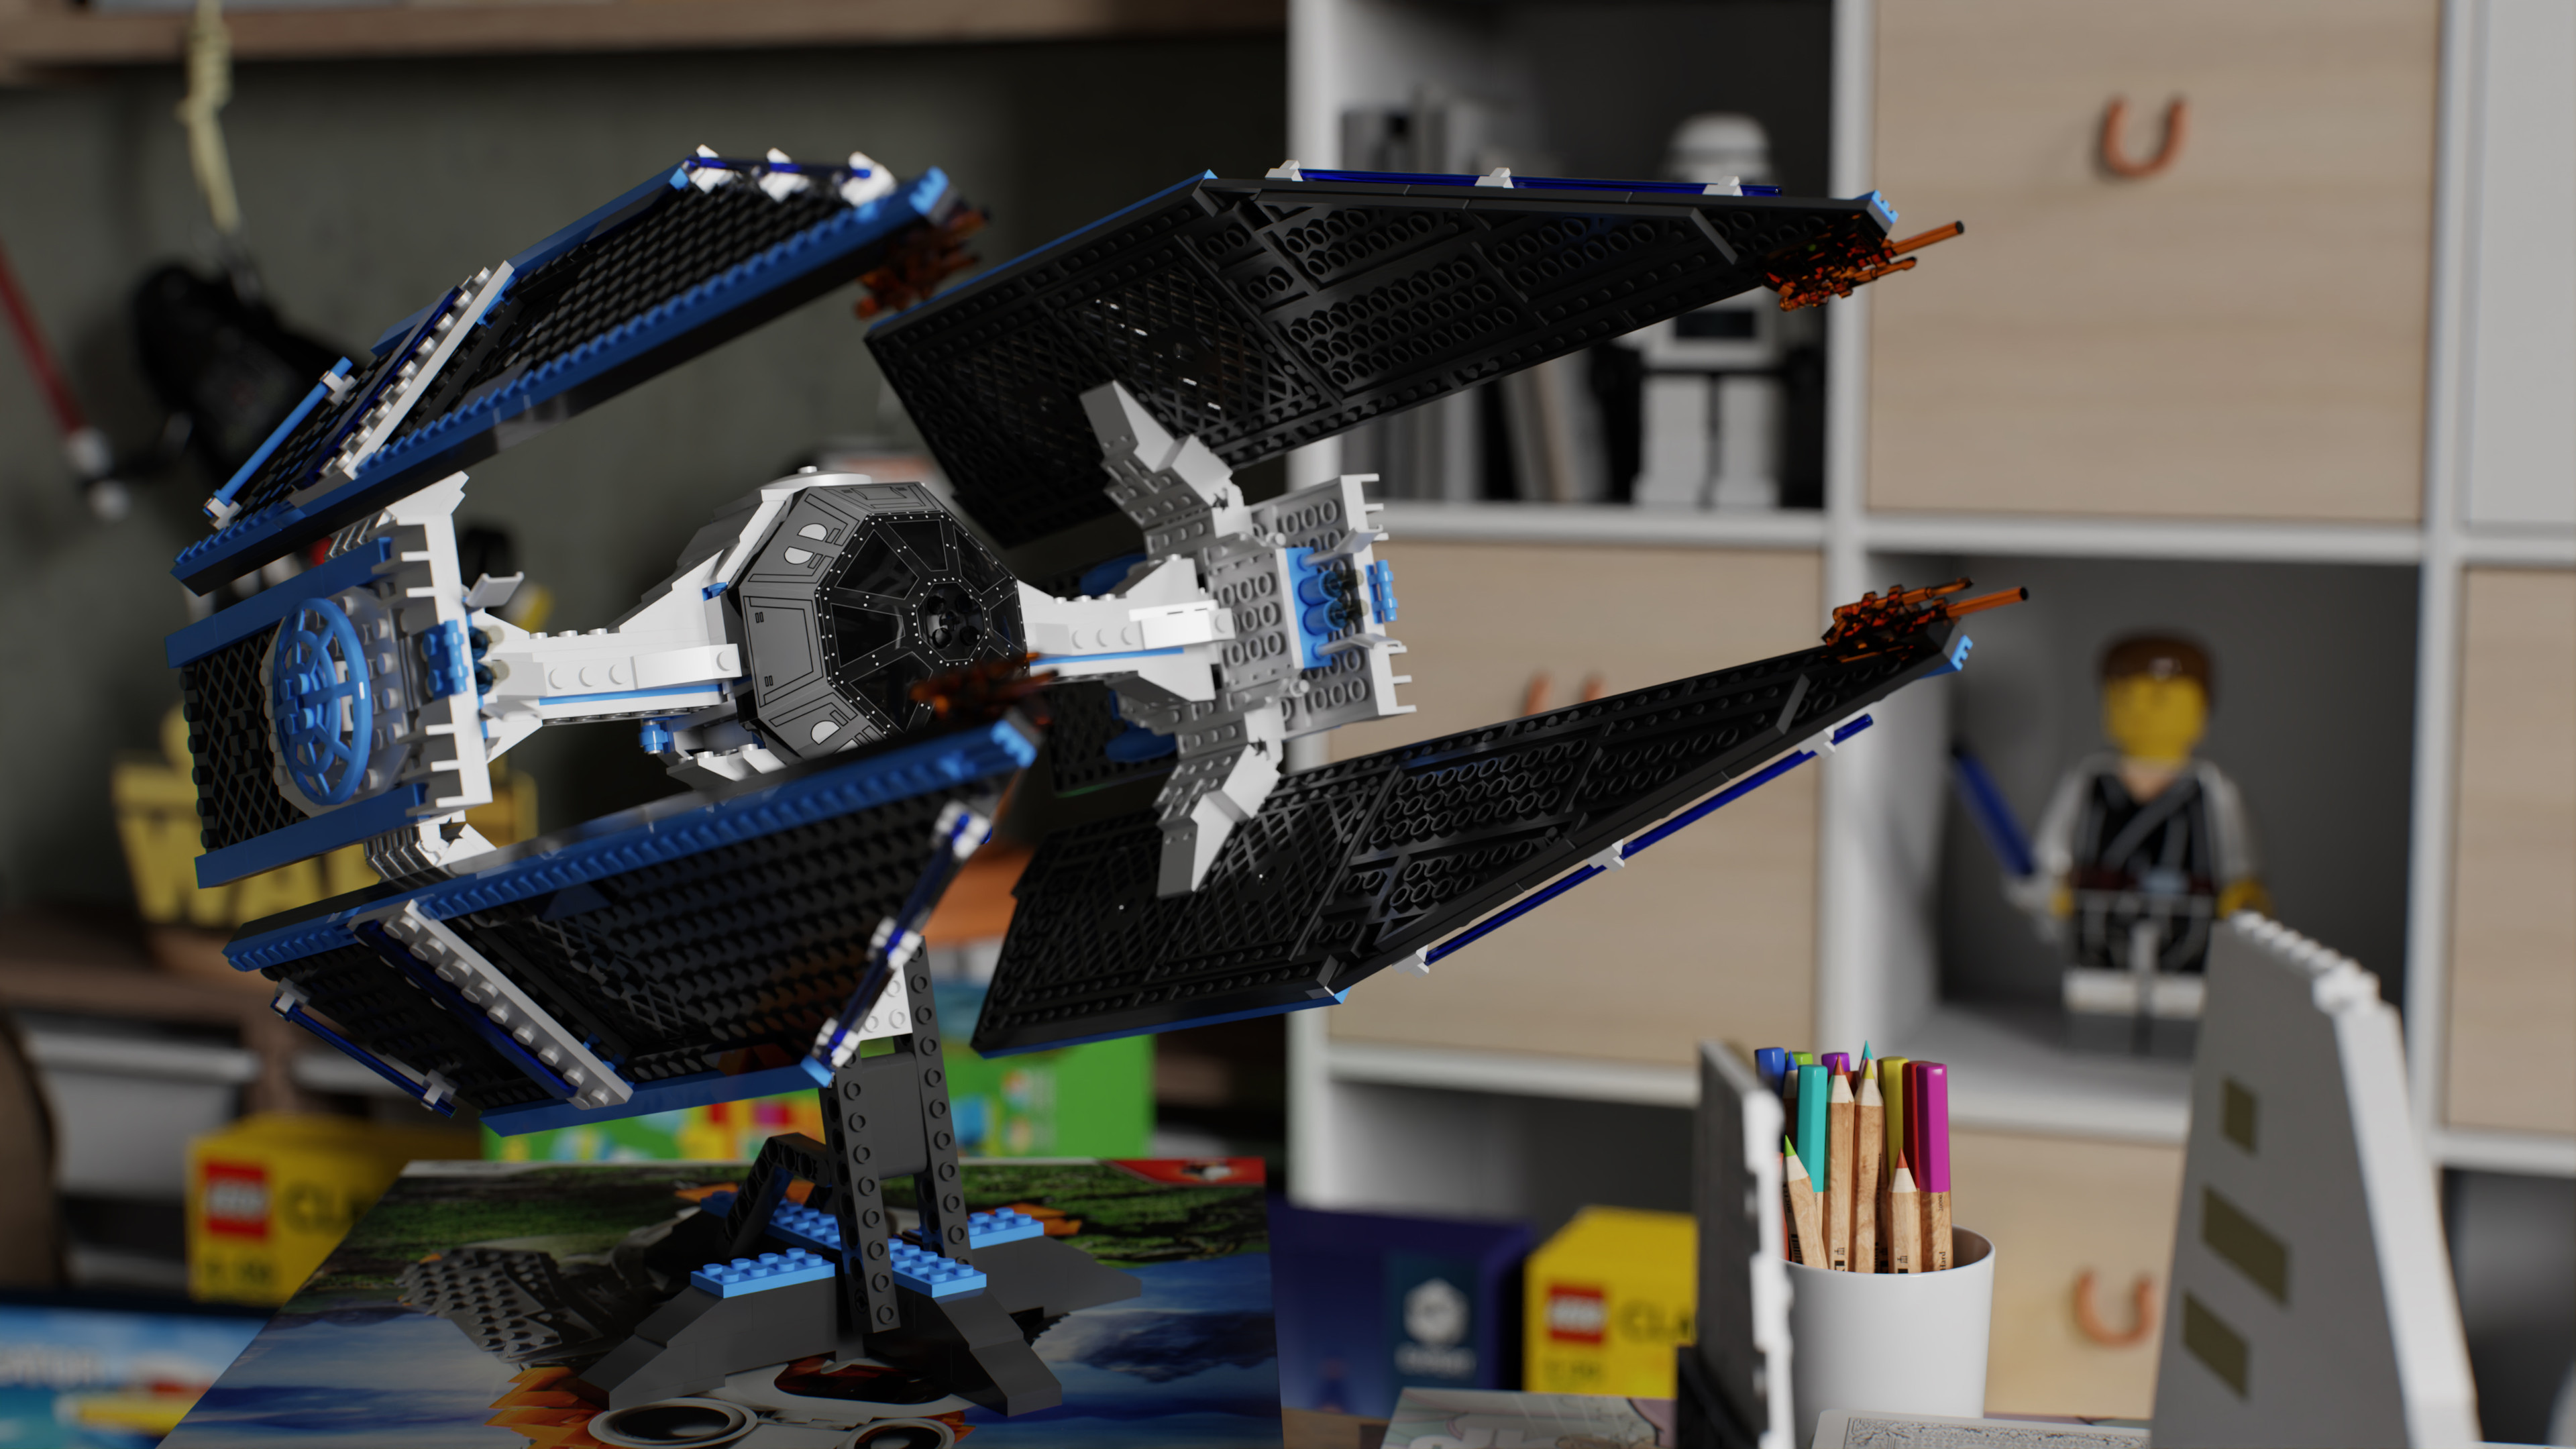 General 3840x2160 Star Wars LEGO toys Star Wars Ships TIE Interceptor science fiction